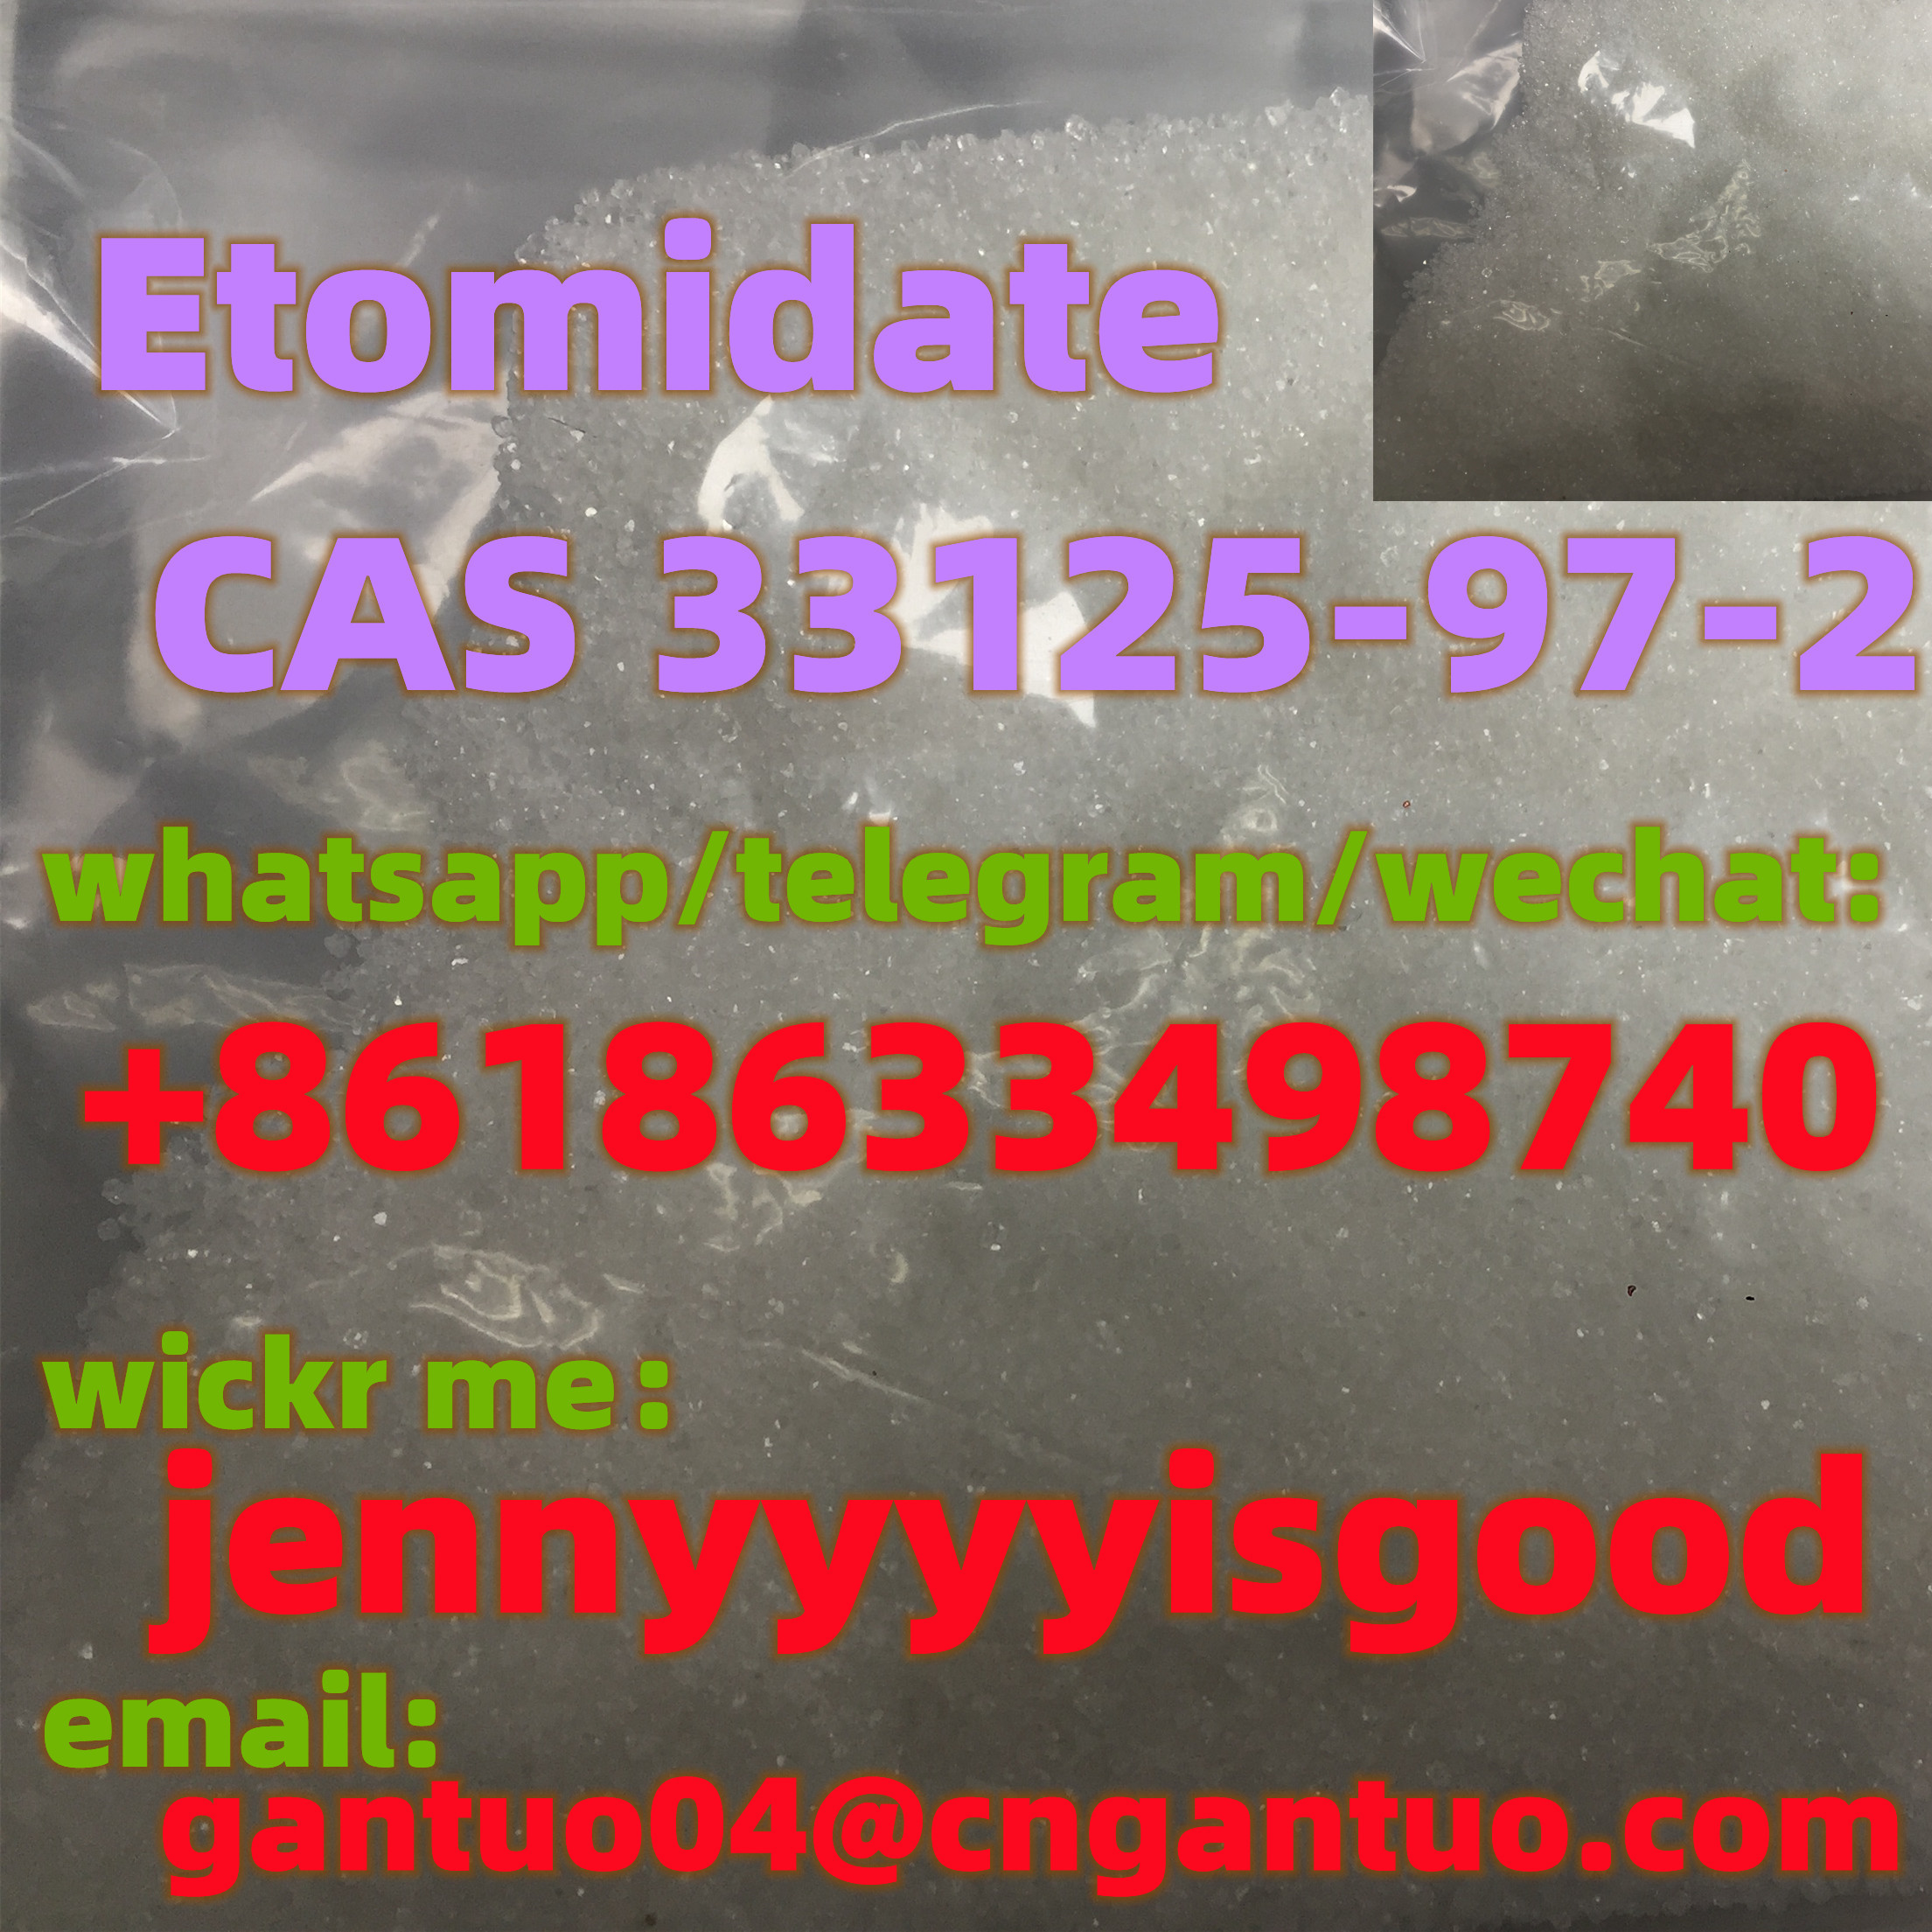 New Etomidate CAS 33125-97-2 high purity รูปที่ 1